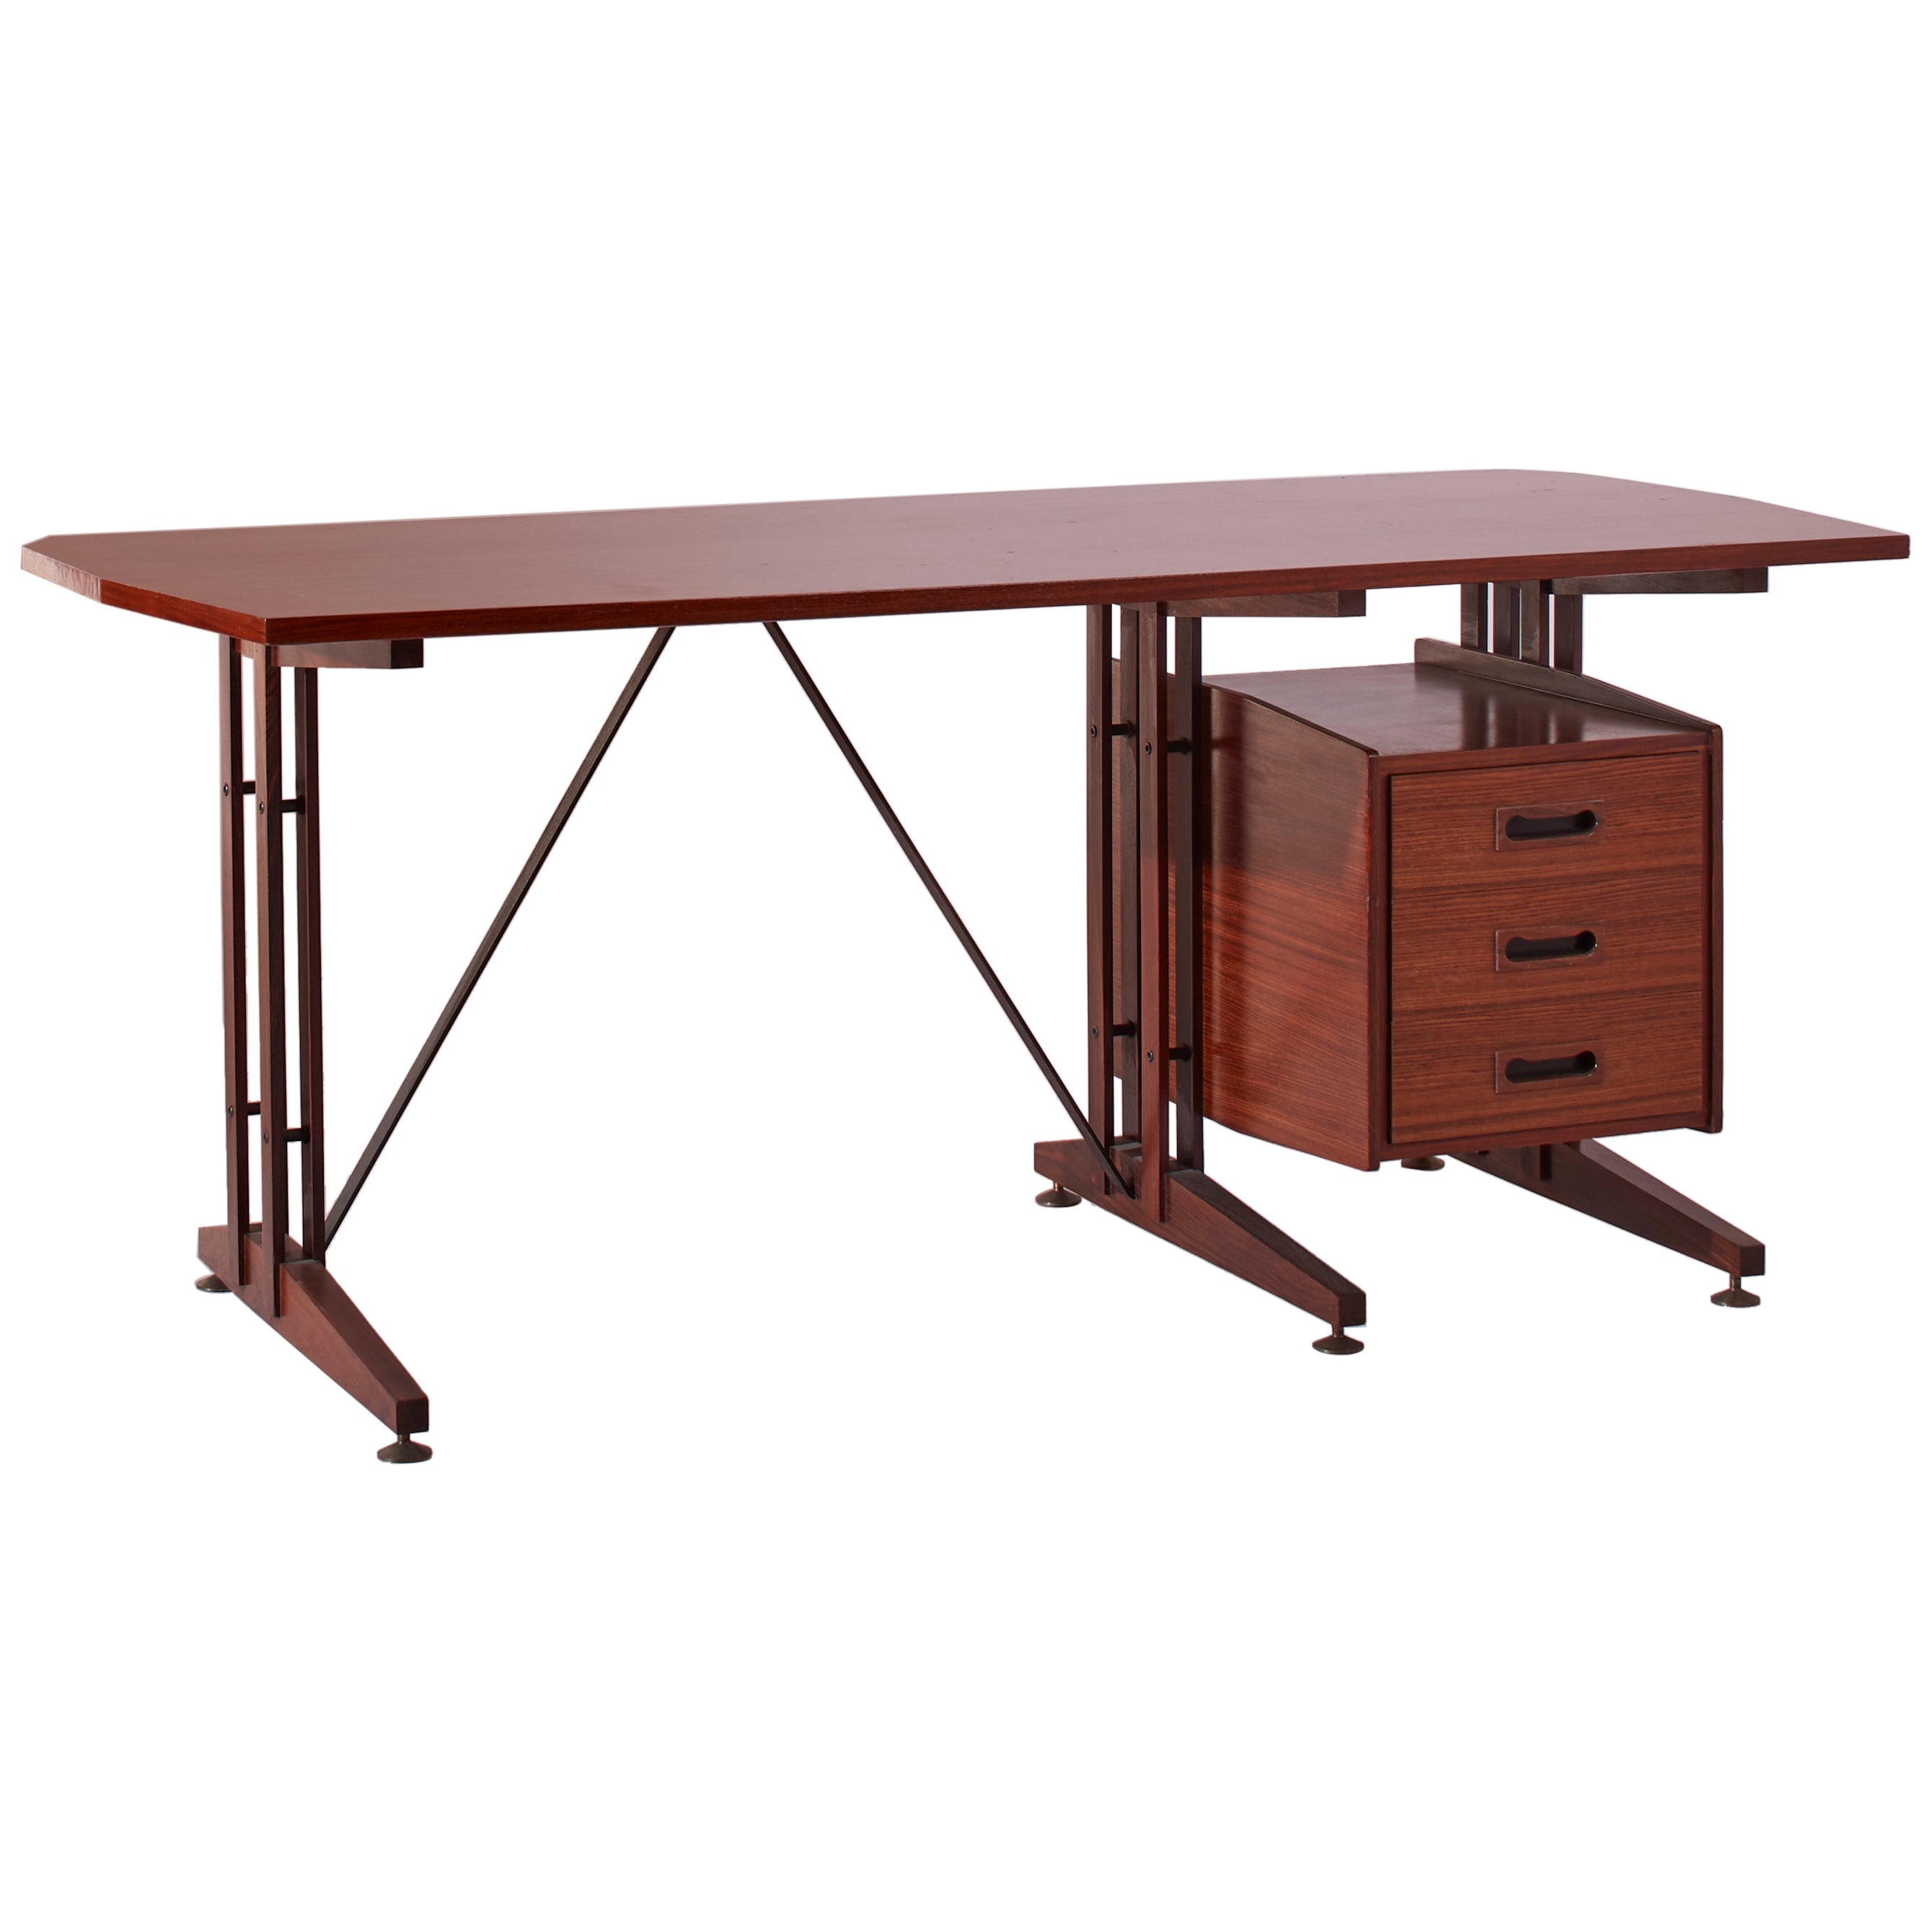 ILA (Industria Lombarda Arredamenti) teak and metal desk model Ss34, Italy, 1959